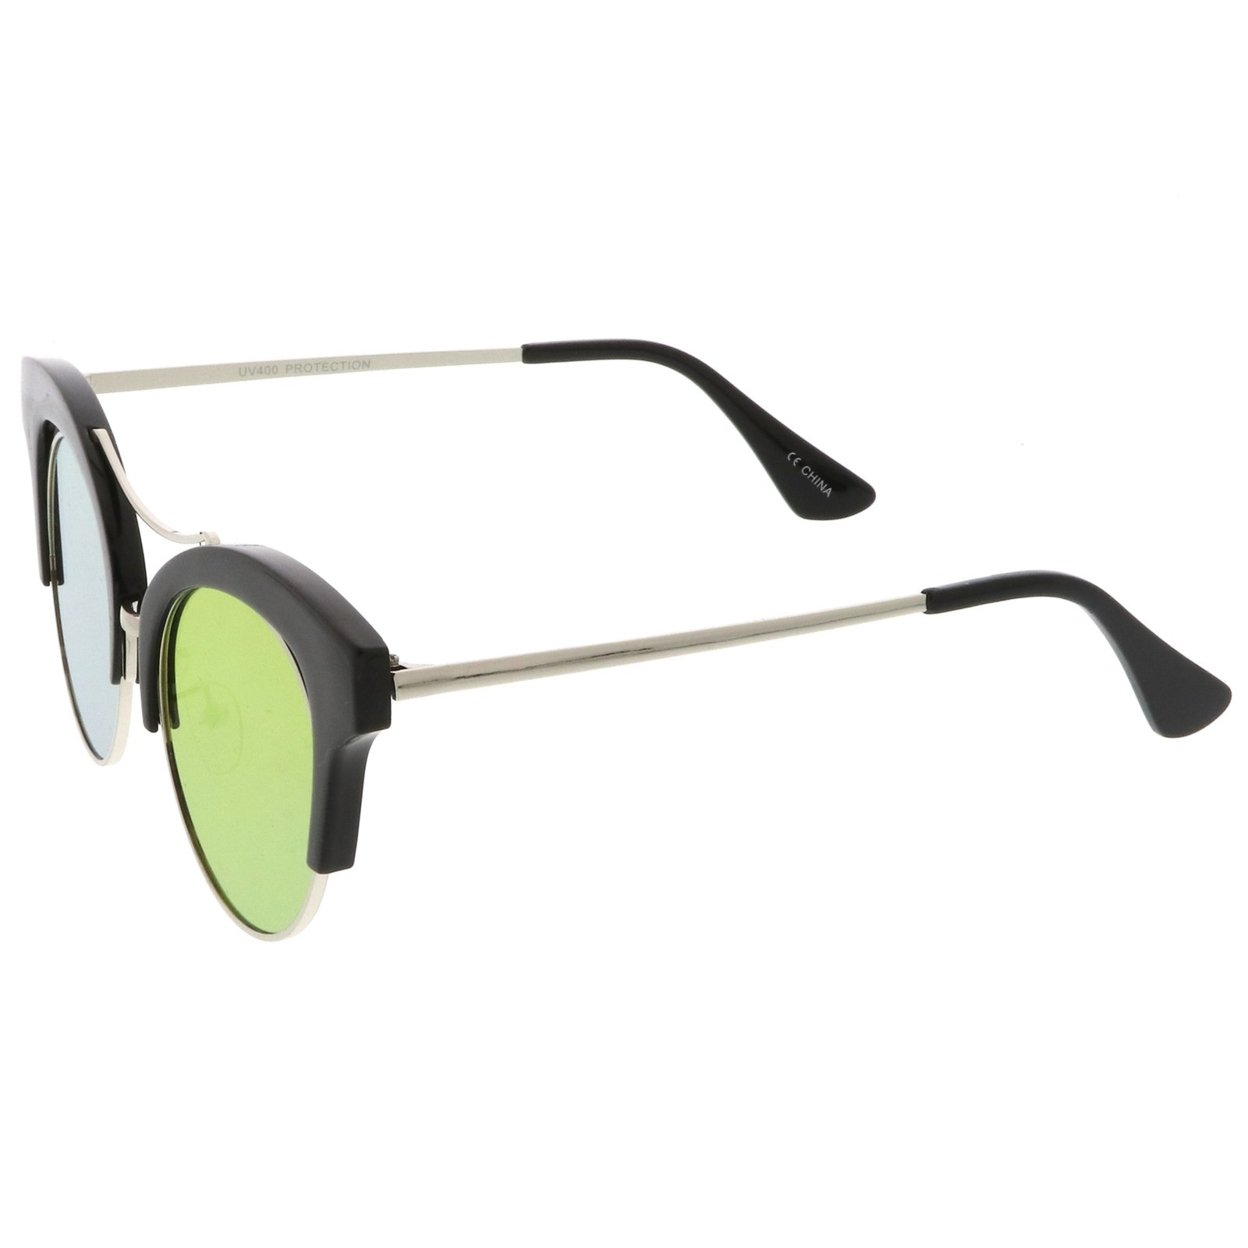 Women's Oversize Cutout Brow Bar Mirror Round Flat Lens Cat Eye Sunglasses 51mm - Black-Silver / Magenta Mirror